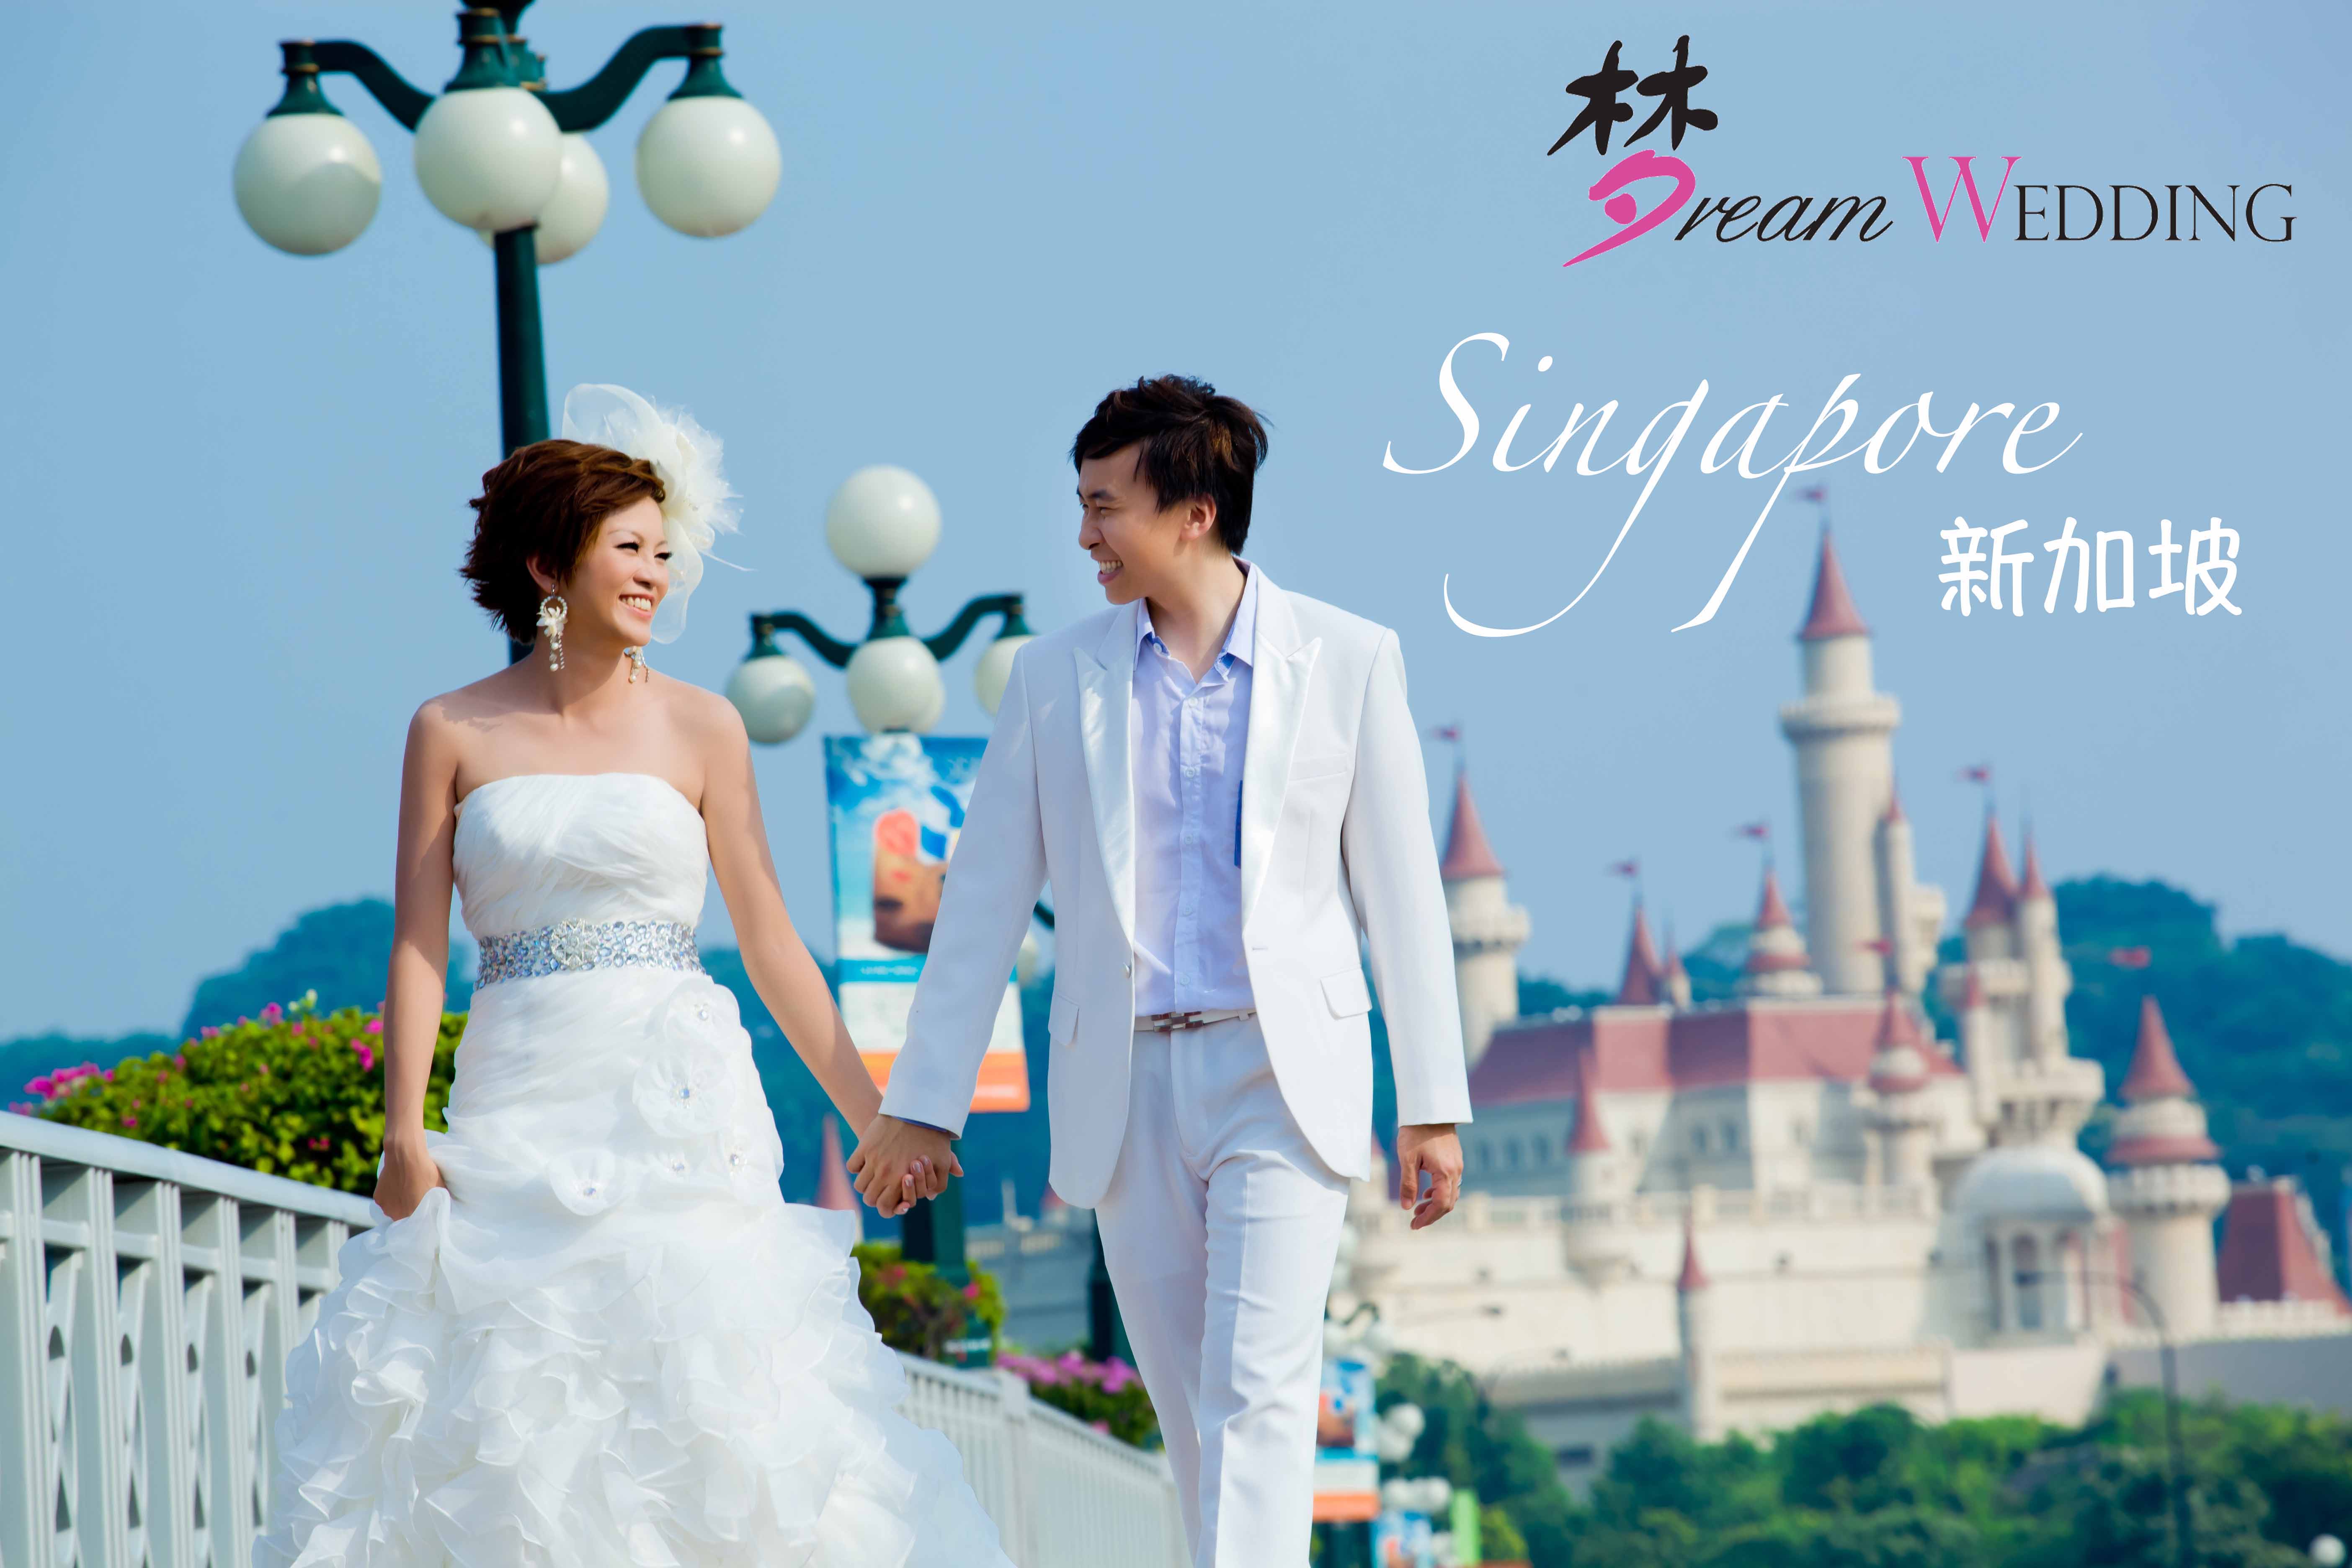 Singapore pre wedding photography package bridal dream wedding boutique signature photoshoot sentosa castle